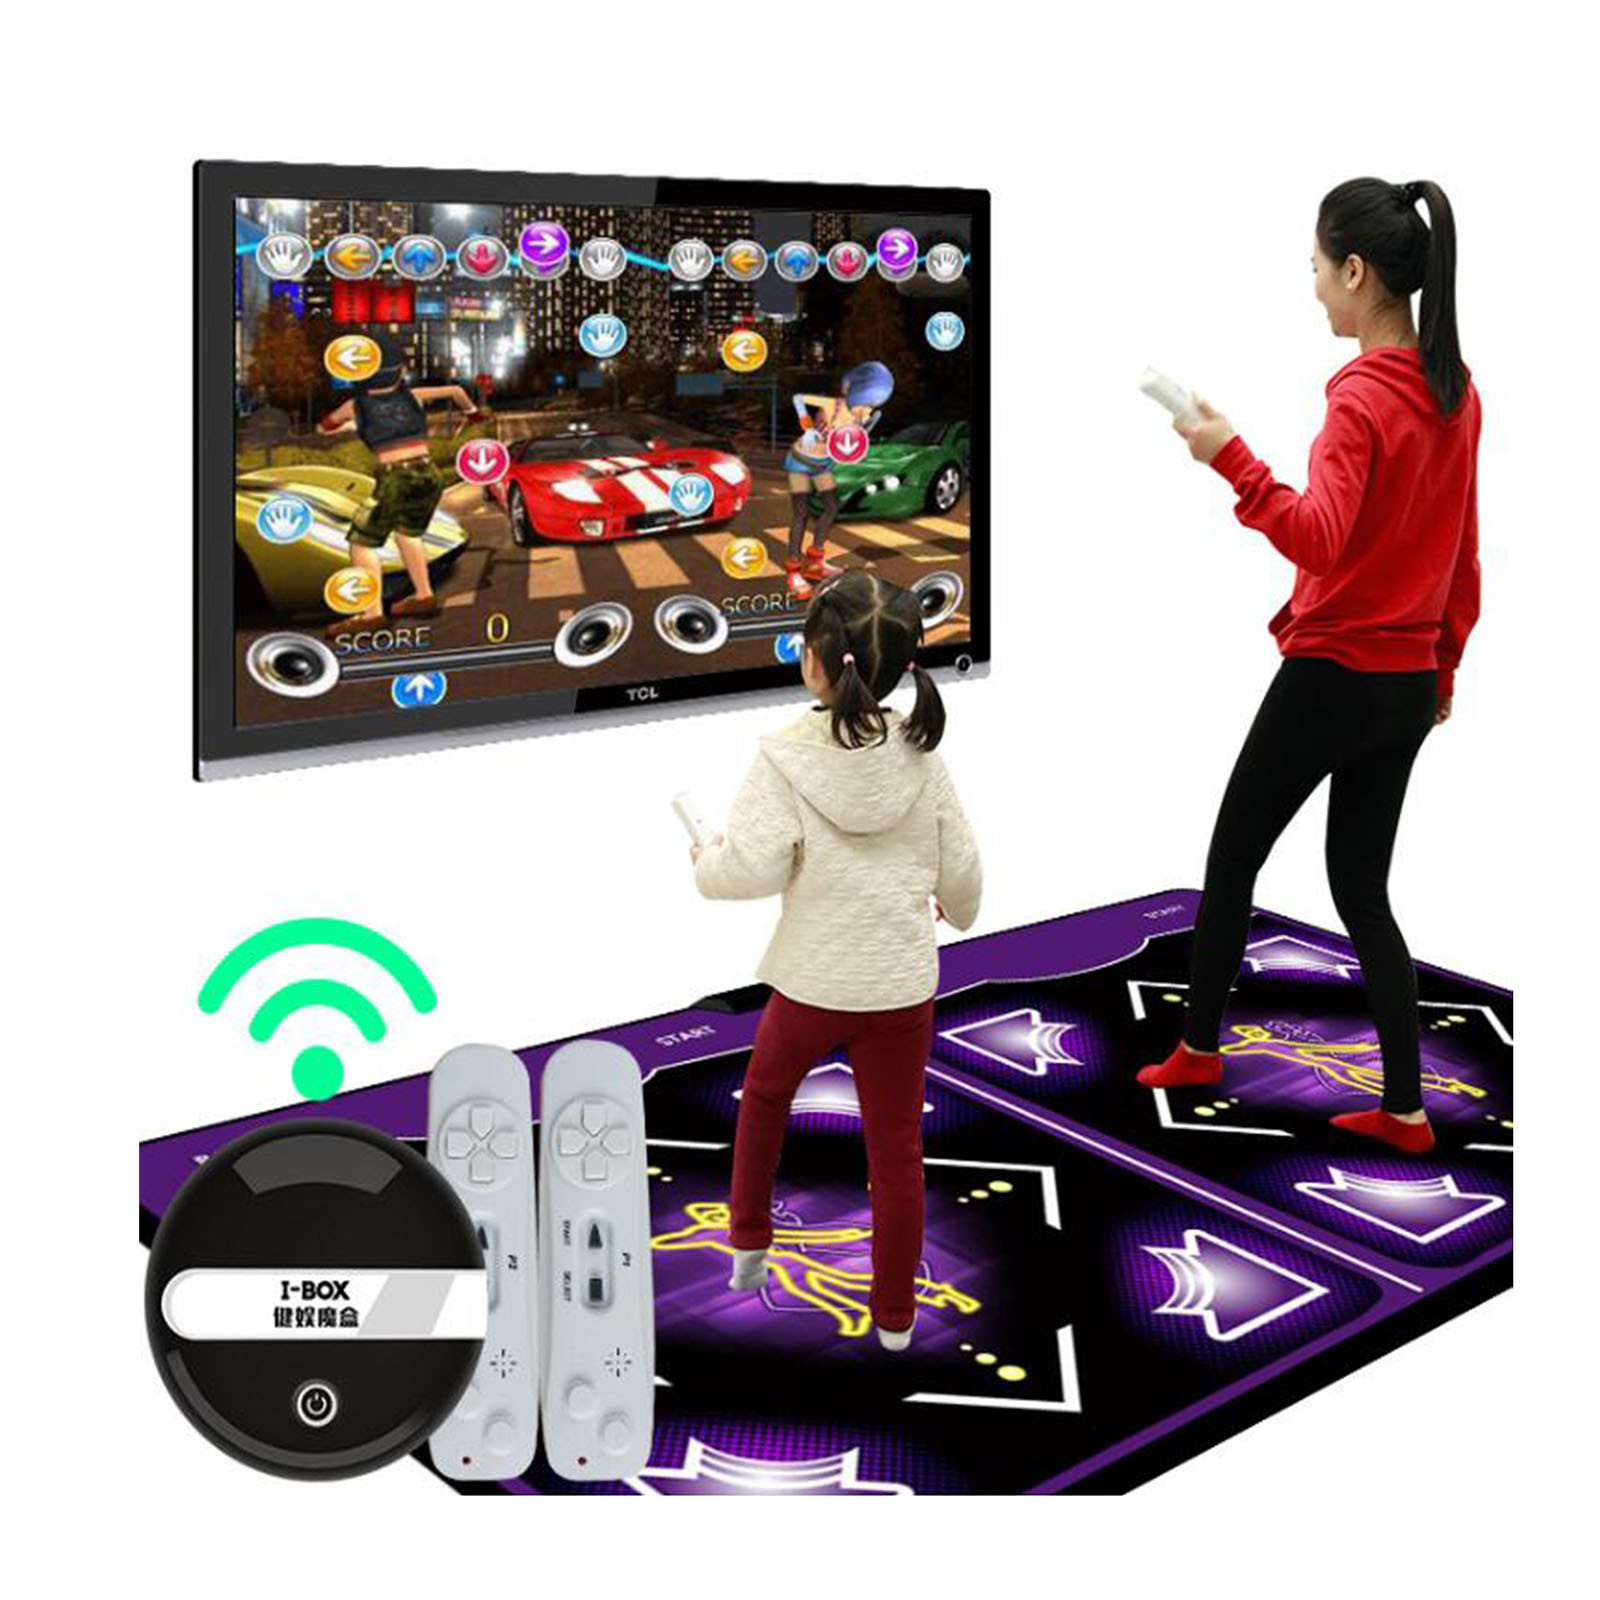 Double user English menu 11 mm thickness single dance pad Non-Slip Pad yoga mat + 2 remote controller sense game for PC & TV